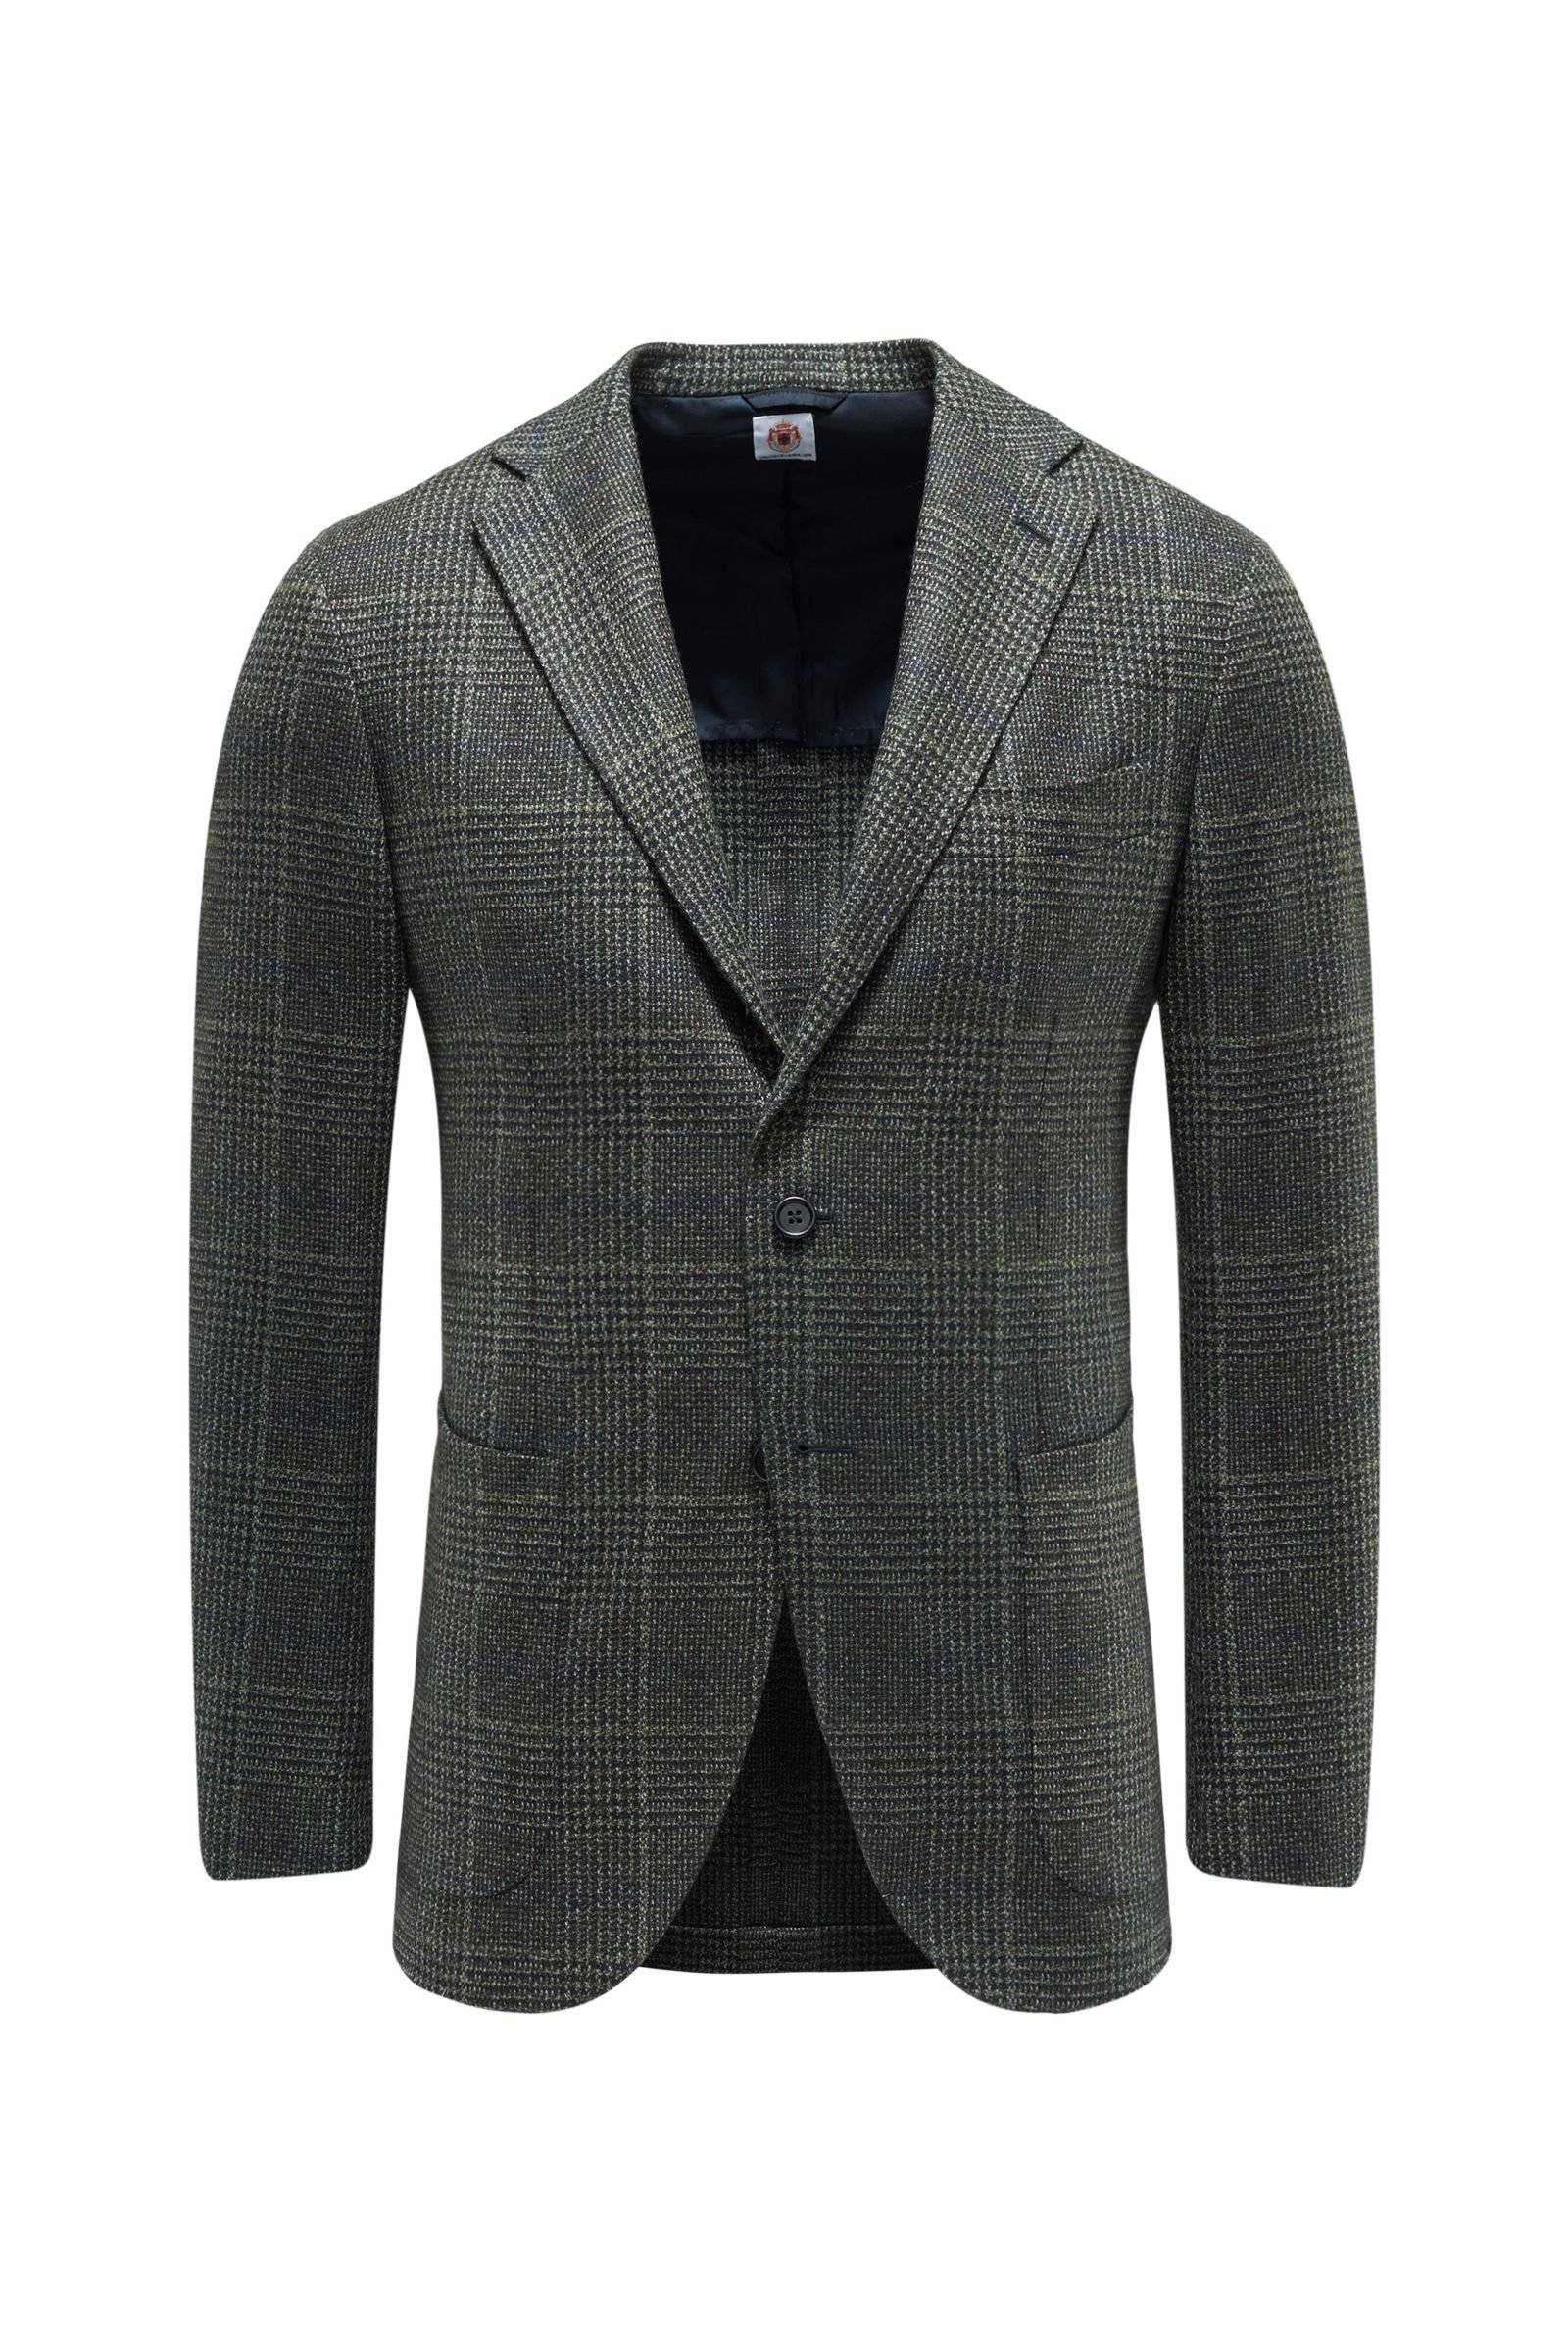 Cashmere smart-casual jacket 'Salina' dark green patterned